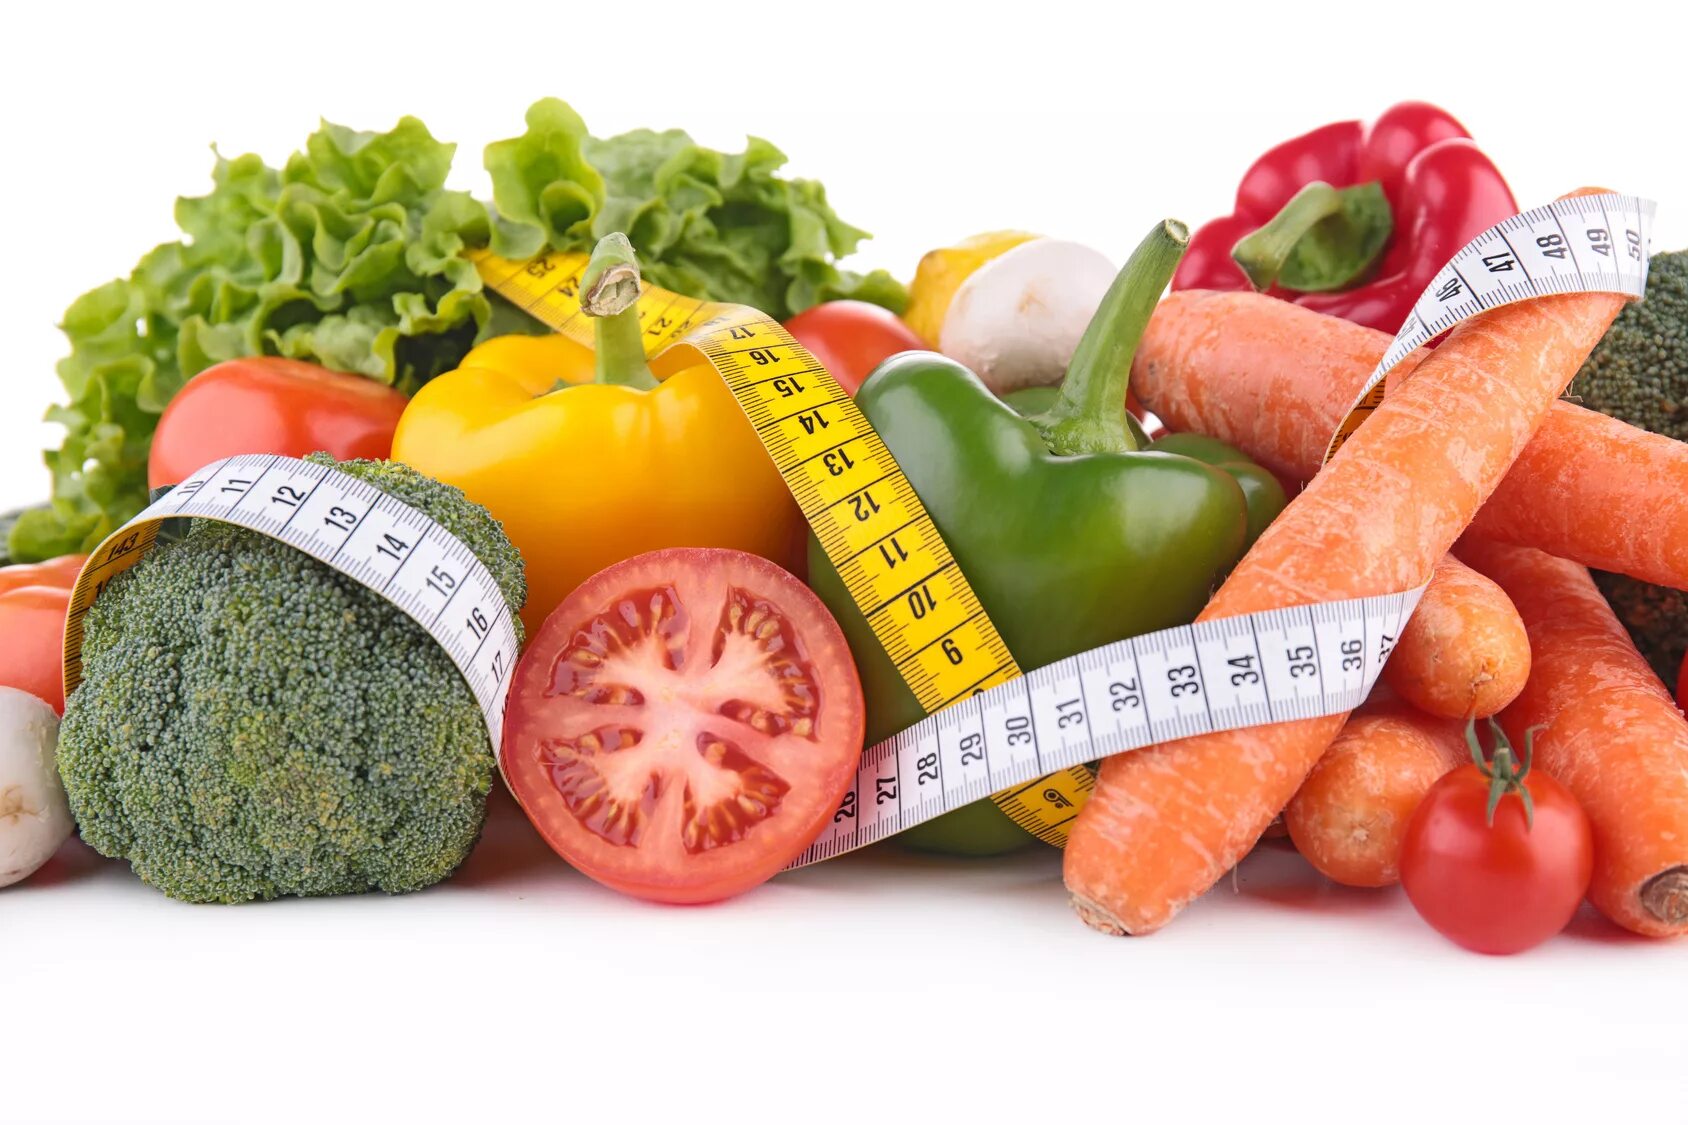 Try diet. Овощи в рационе. Диета. Фрукты и овощи для похудения. Овощи и фрукты в рационе.